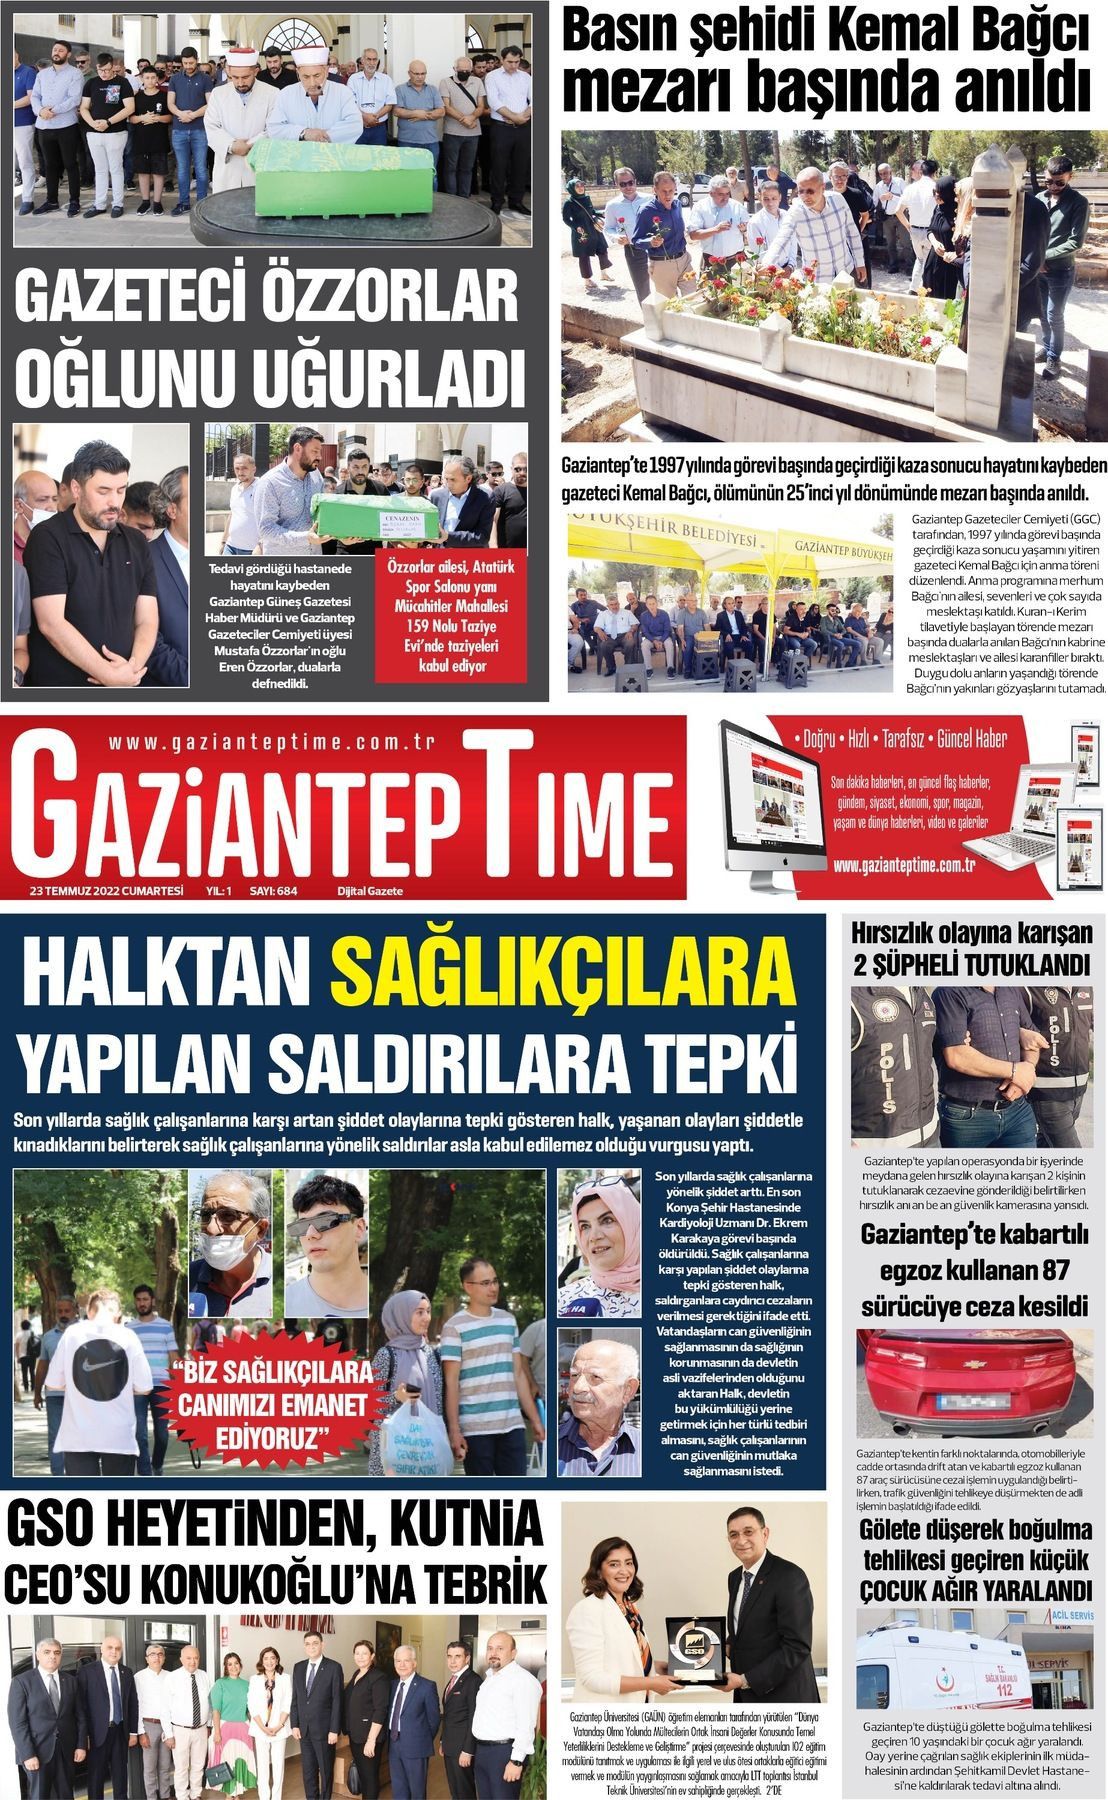 Temmuz Tarihli Gaziantep Time Gazete Man Etleri